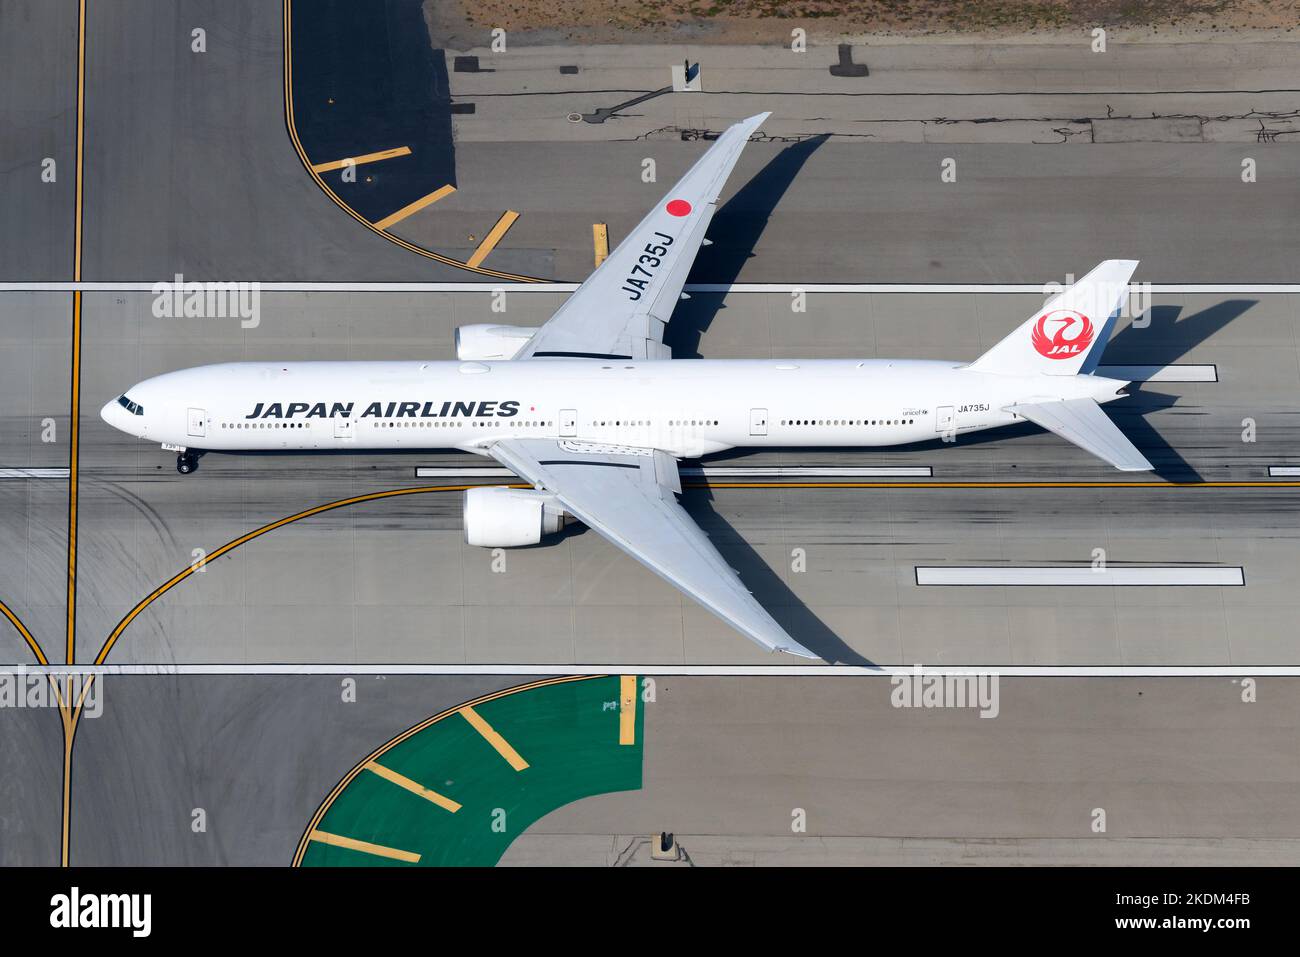 Japan Airlines Boeing 777 airplane taking off on runway. Aircraft 77W of Japan Airlines / JAL Airlines. JAL plane JA735J of 777-300ER model. Stock Photo